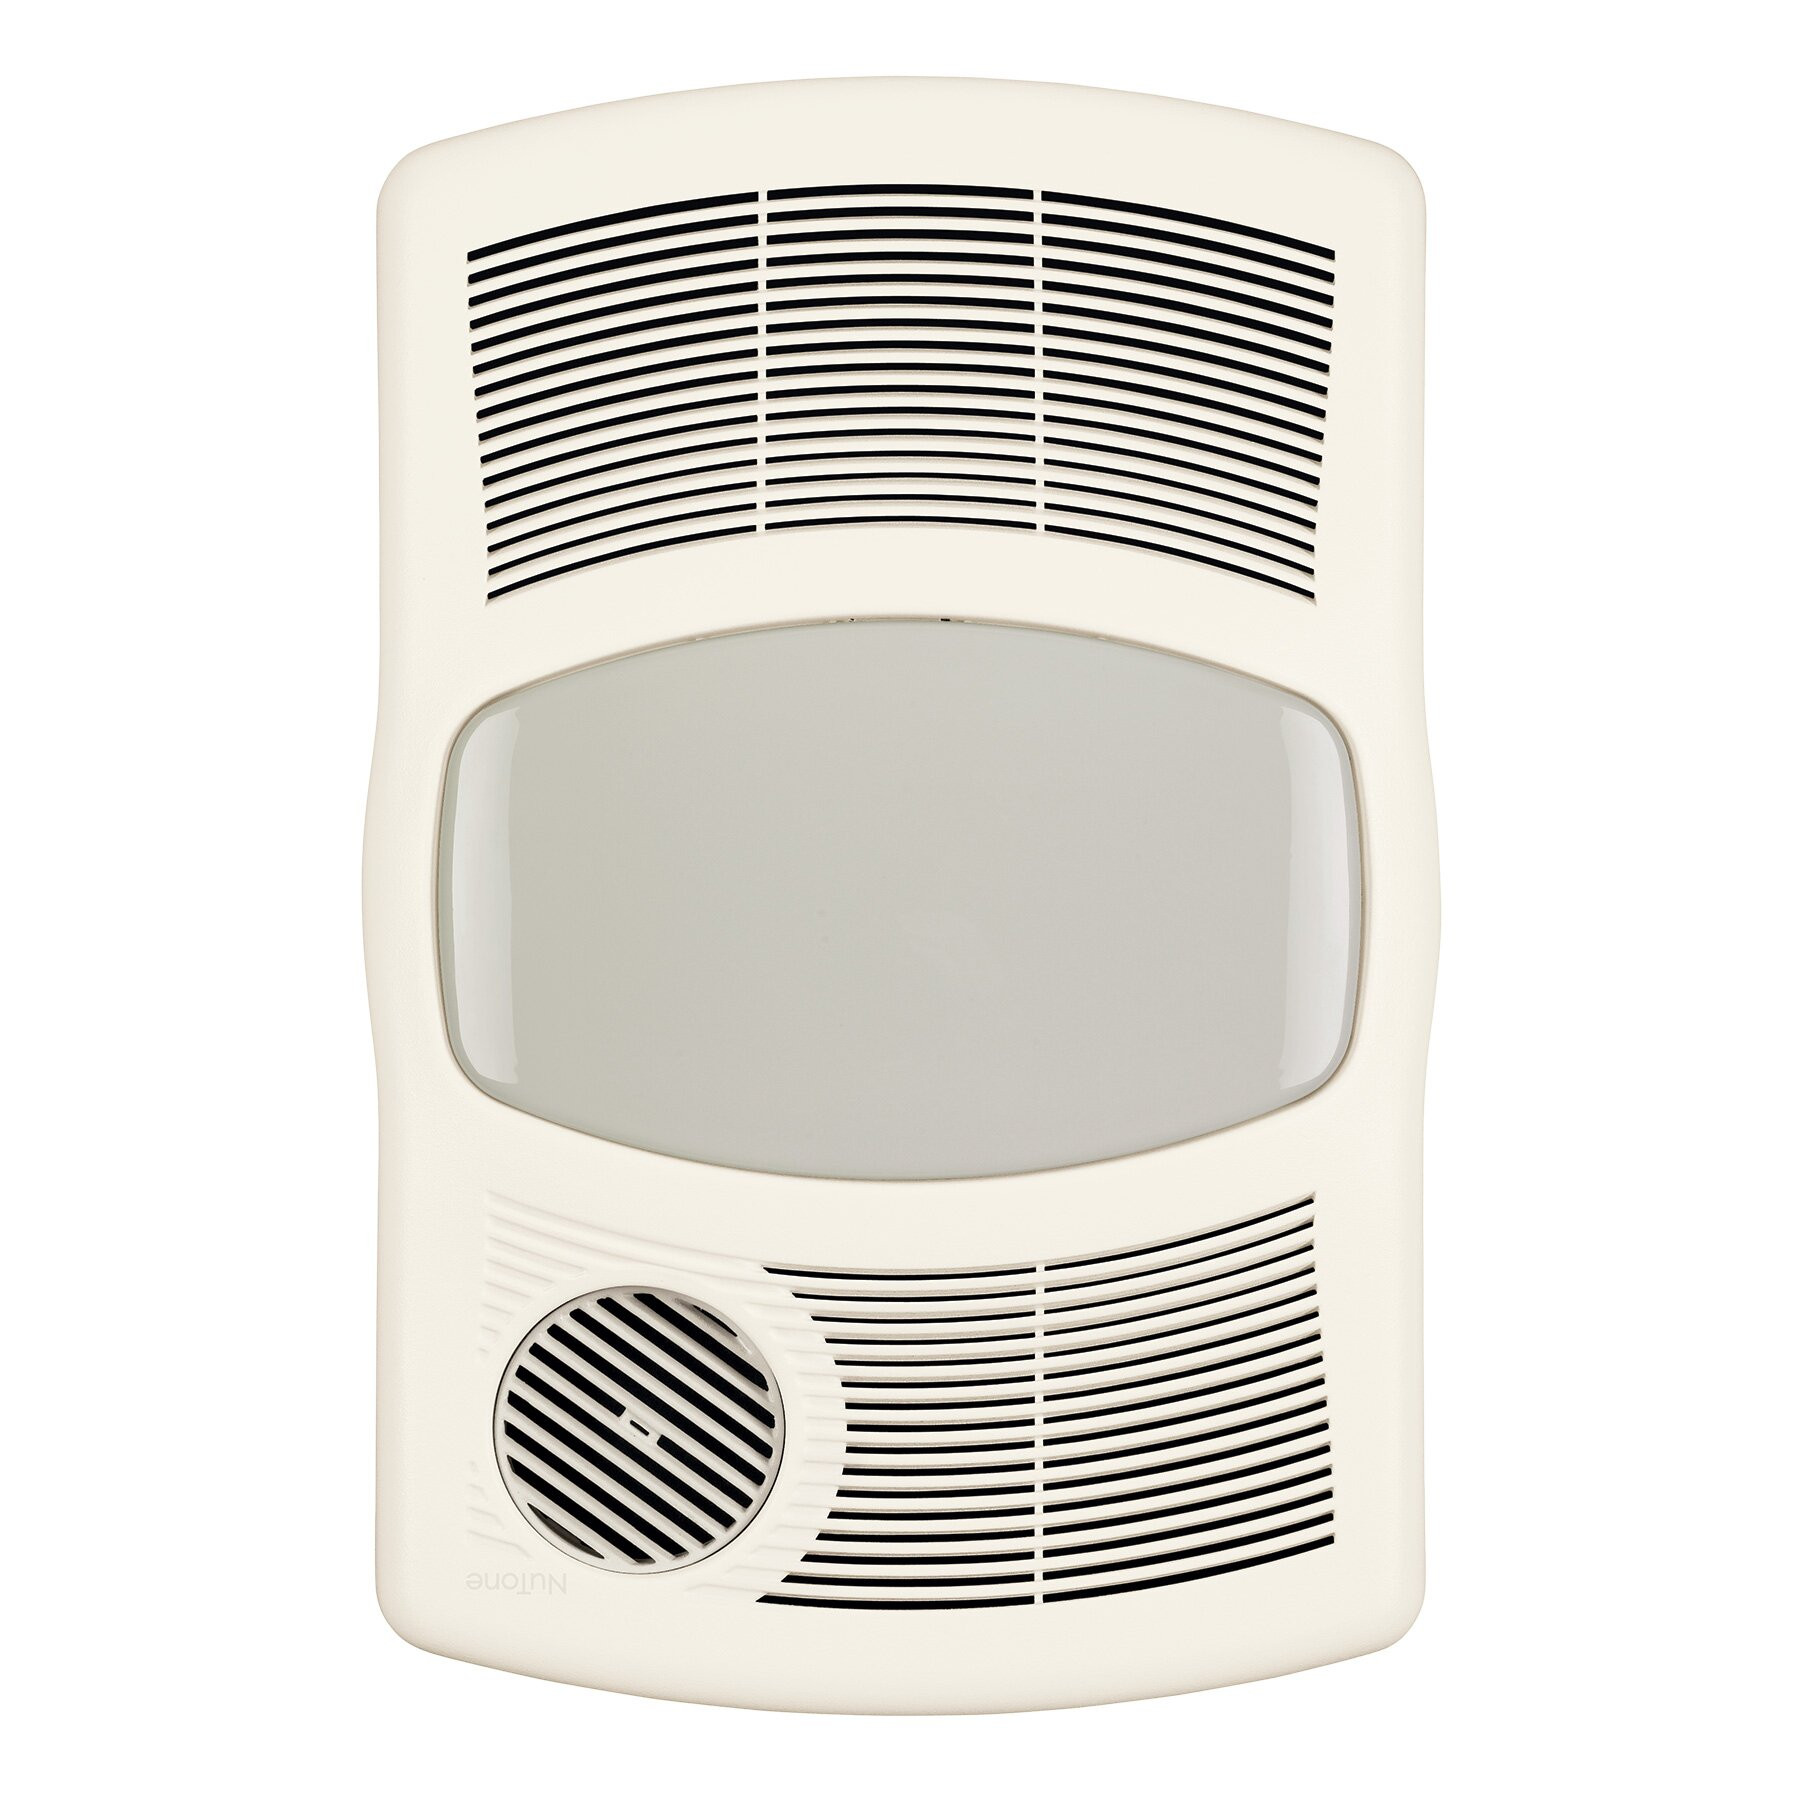 Bathroom Heater Vent Light
 Broan 100 CFM Exhaust Bathroom Fan with Heater & Reviews